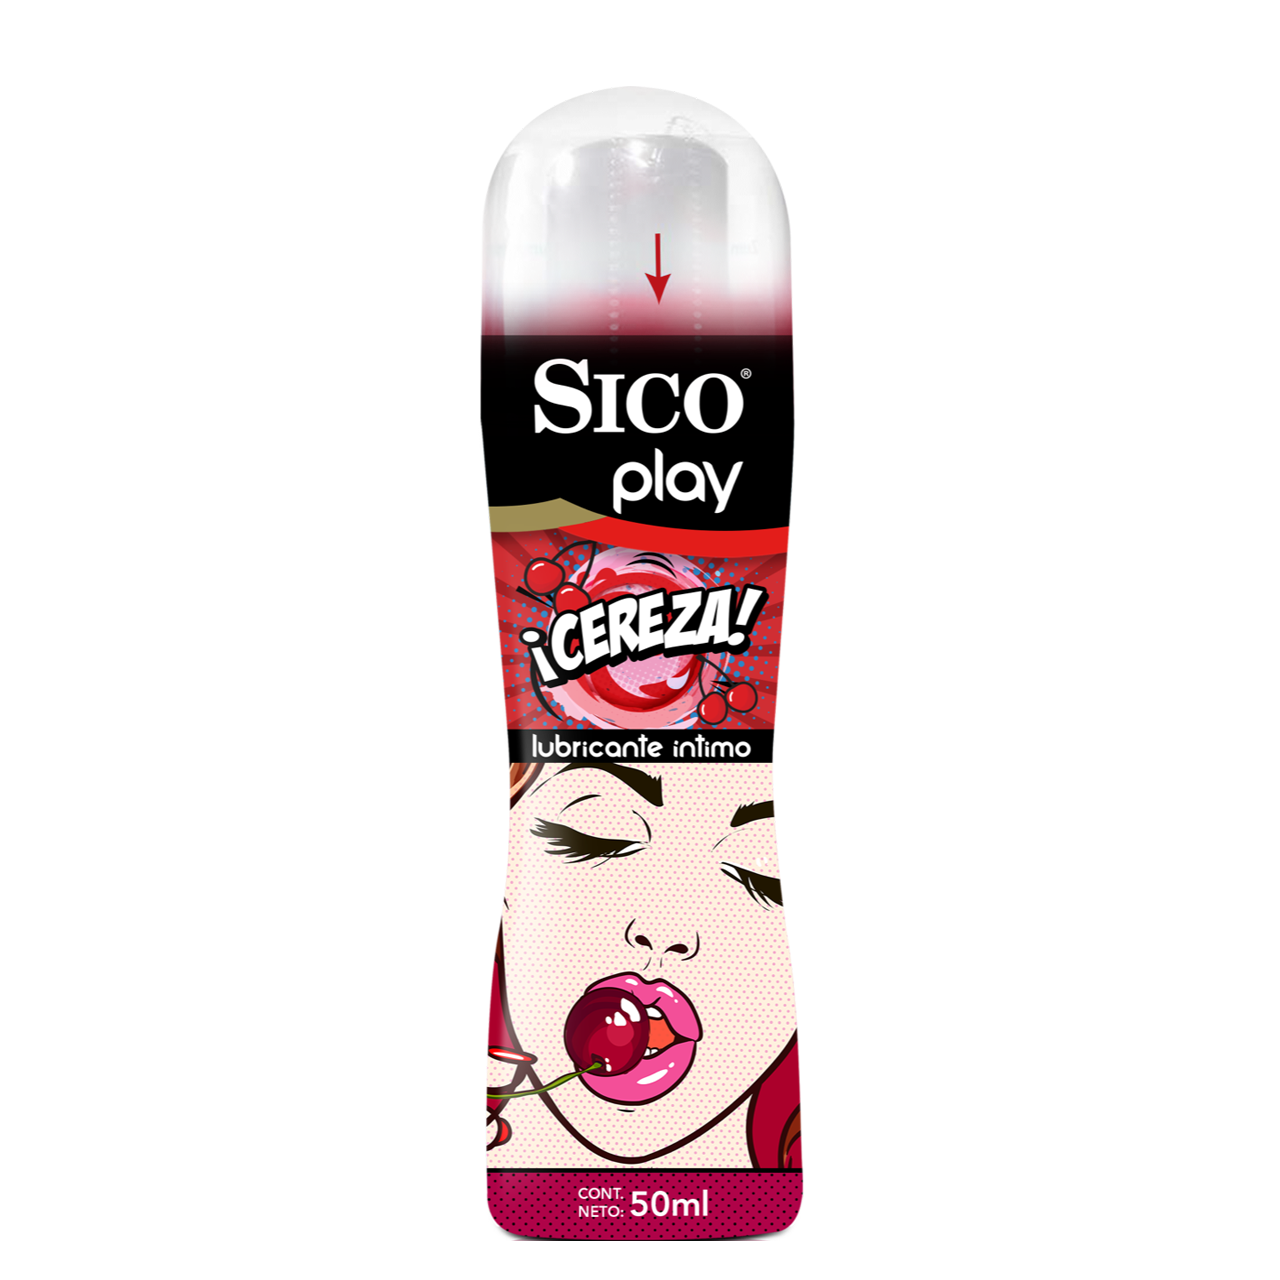 Sico play cherry lube®